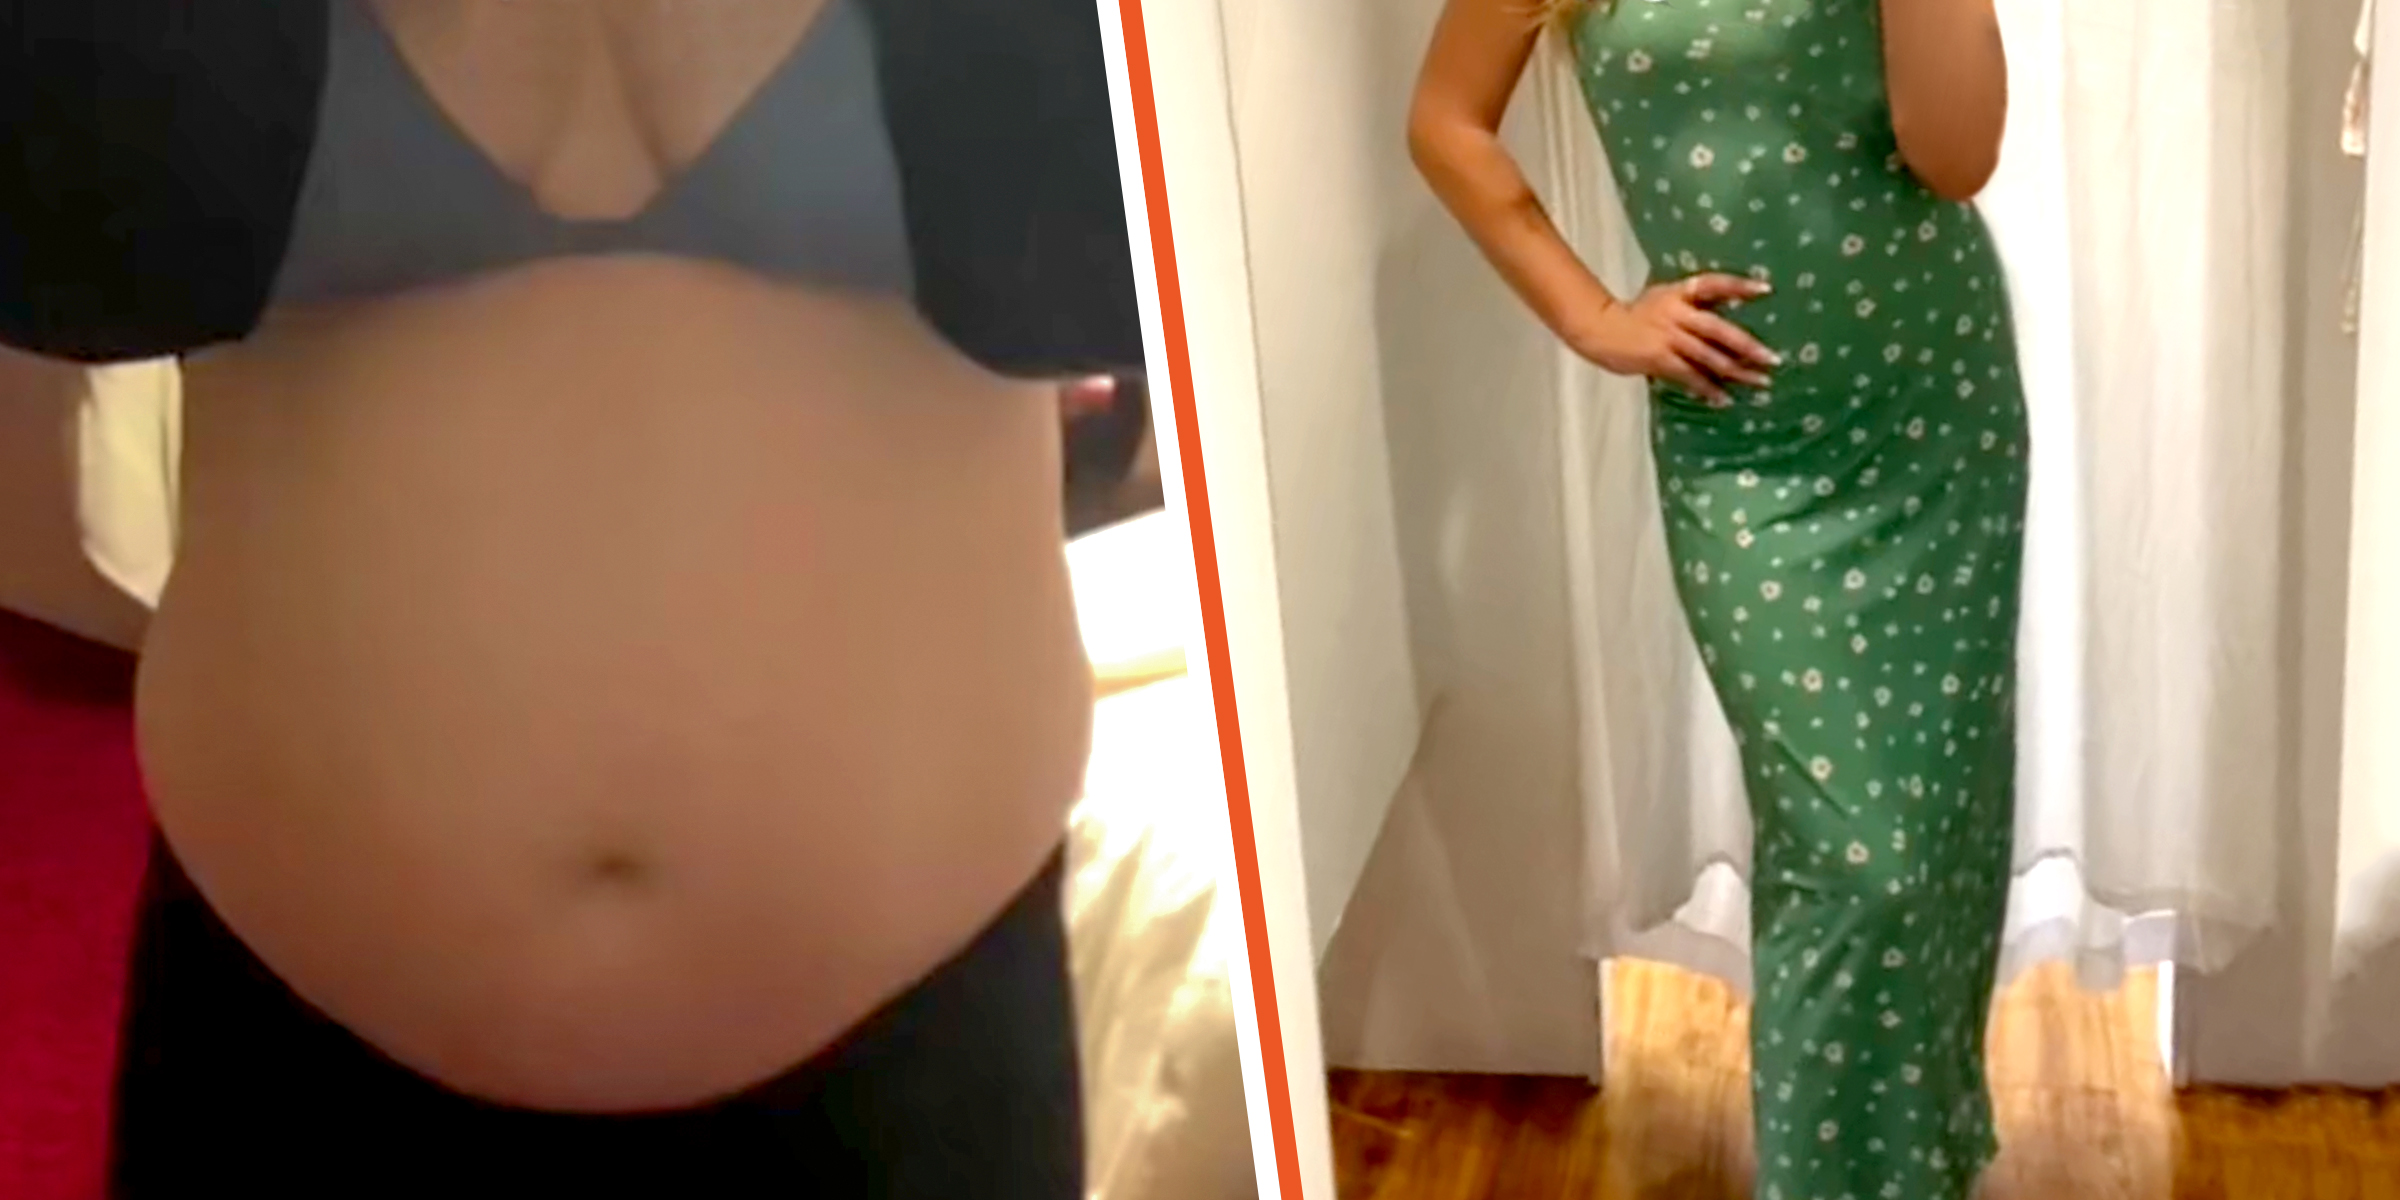 Colleen antes y después de perder 15 kilos | Foto: tiktok.com/queenxxcolleen